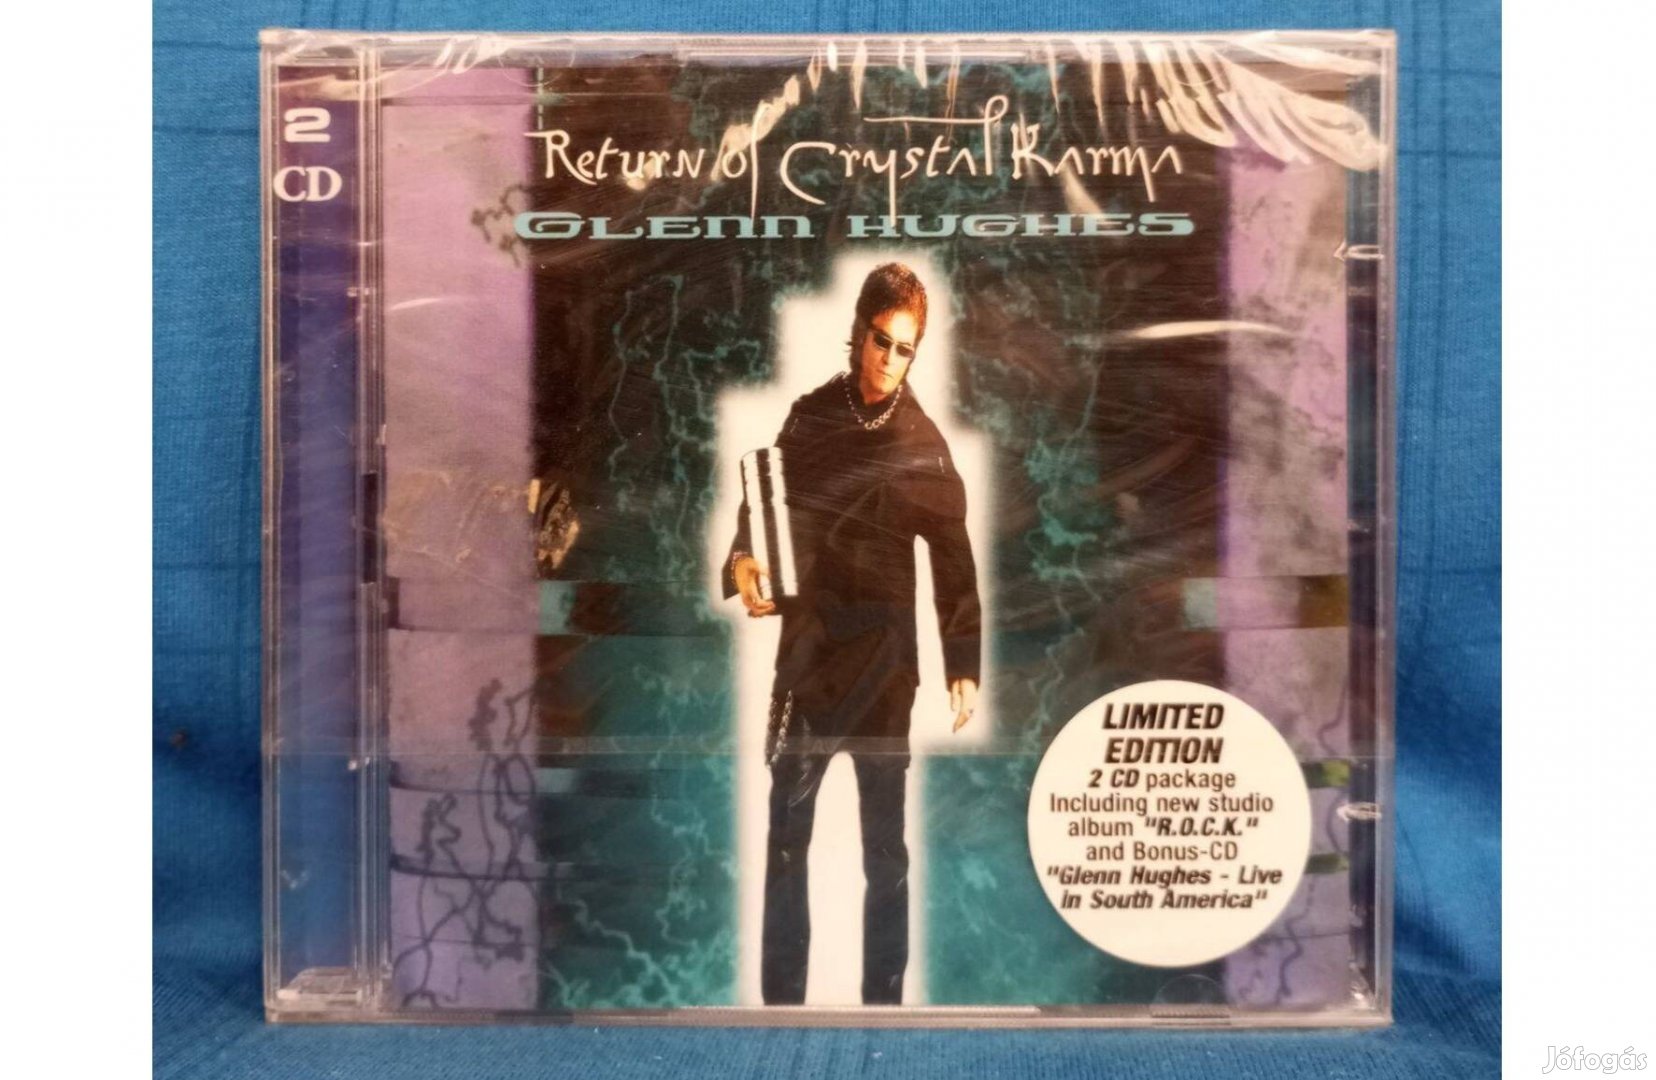 Glenn Hughes - Return of Chrystal Karma 2xCD. /új, fóliás/ Lim.edition